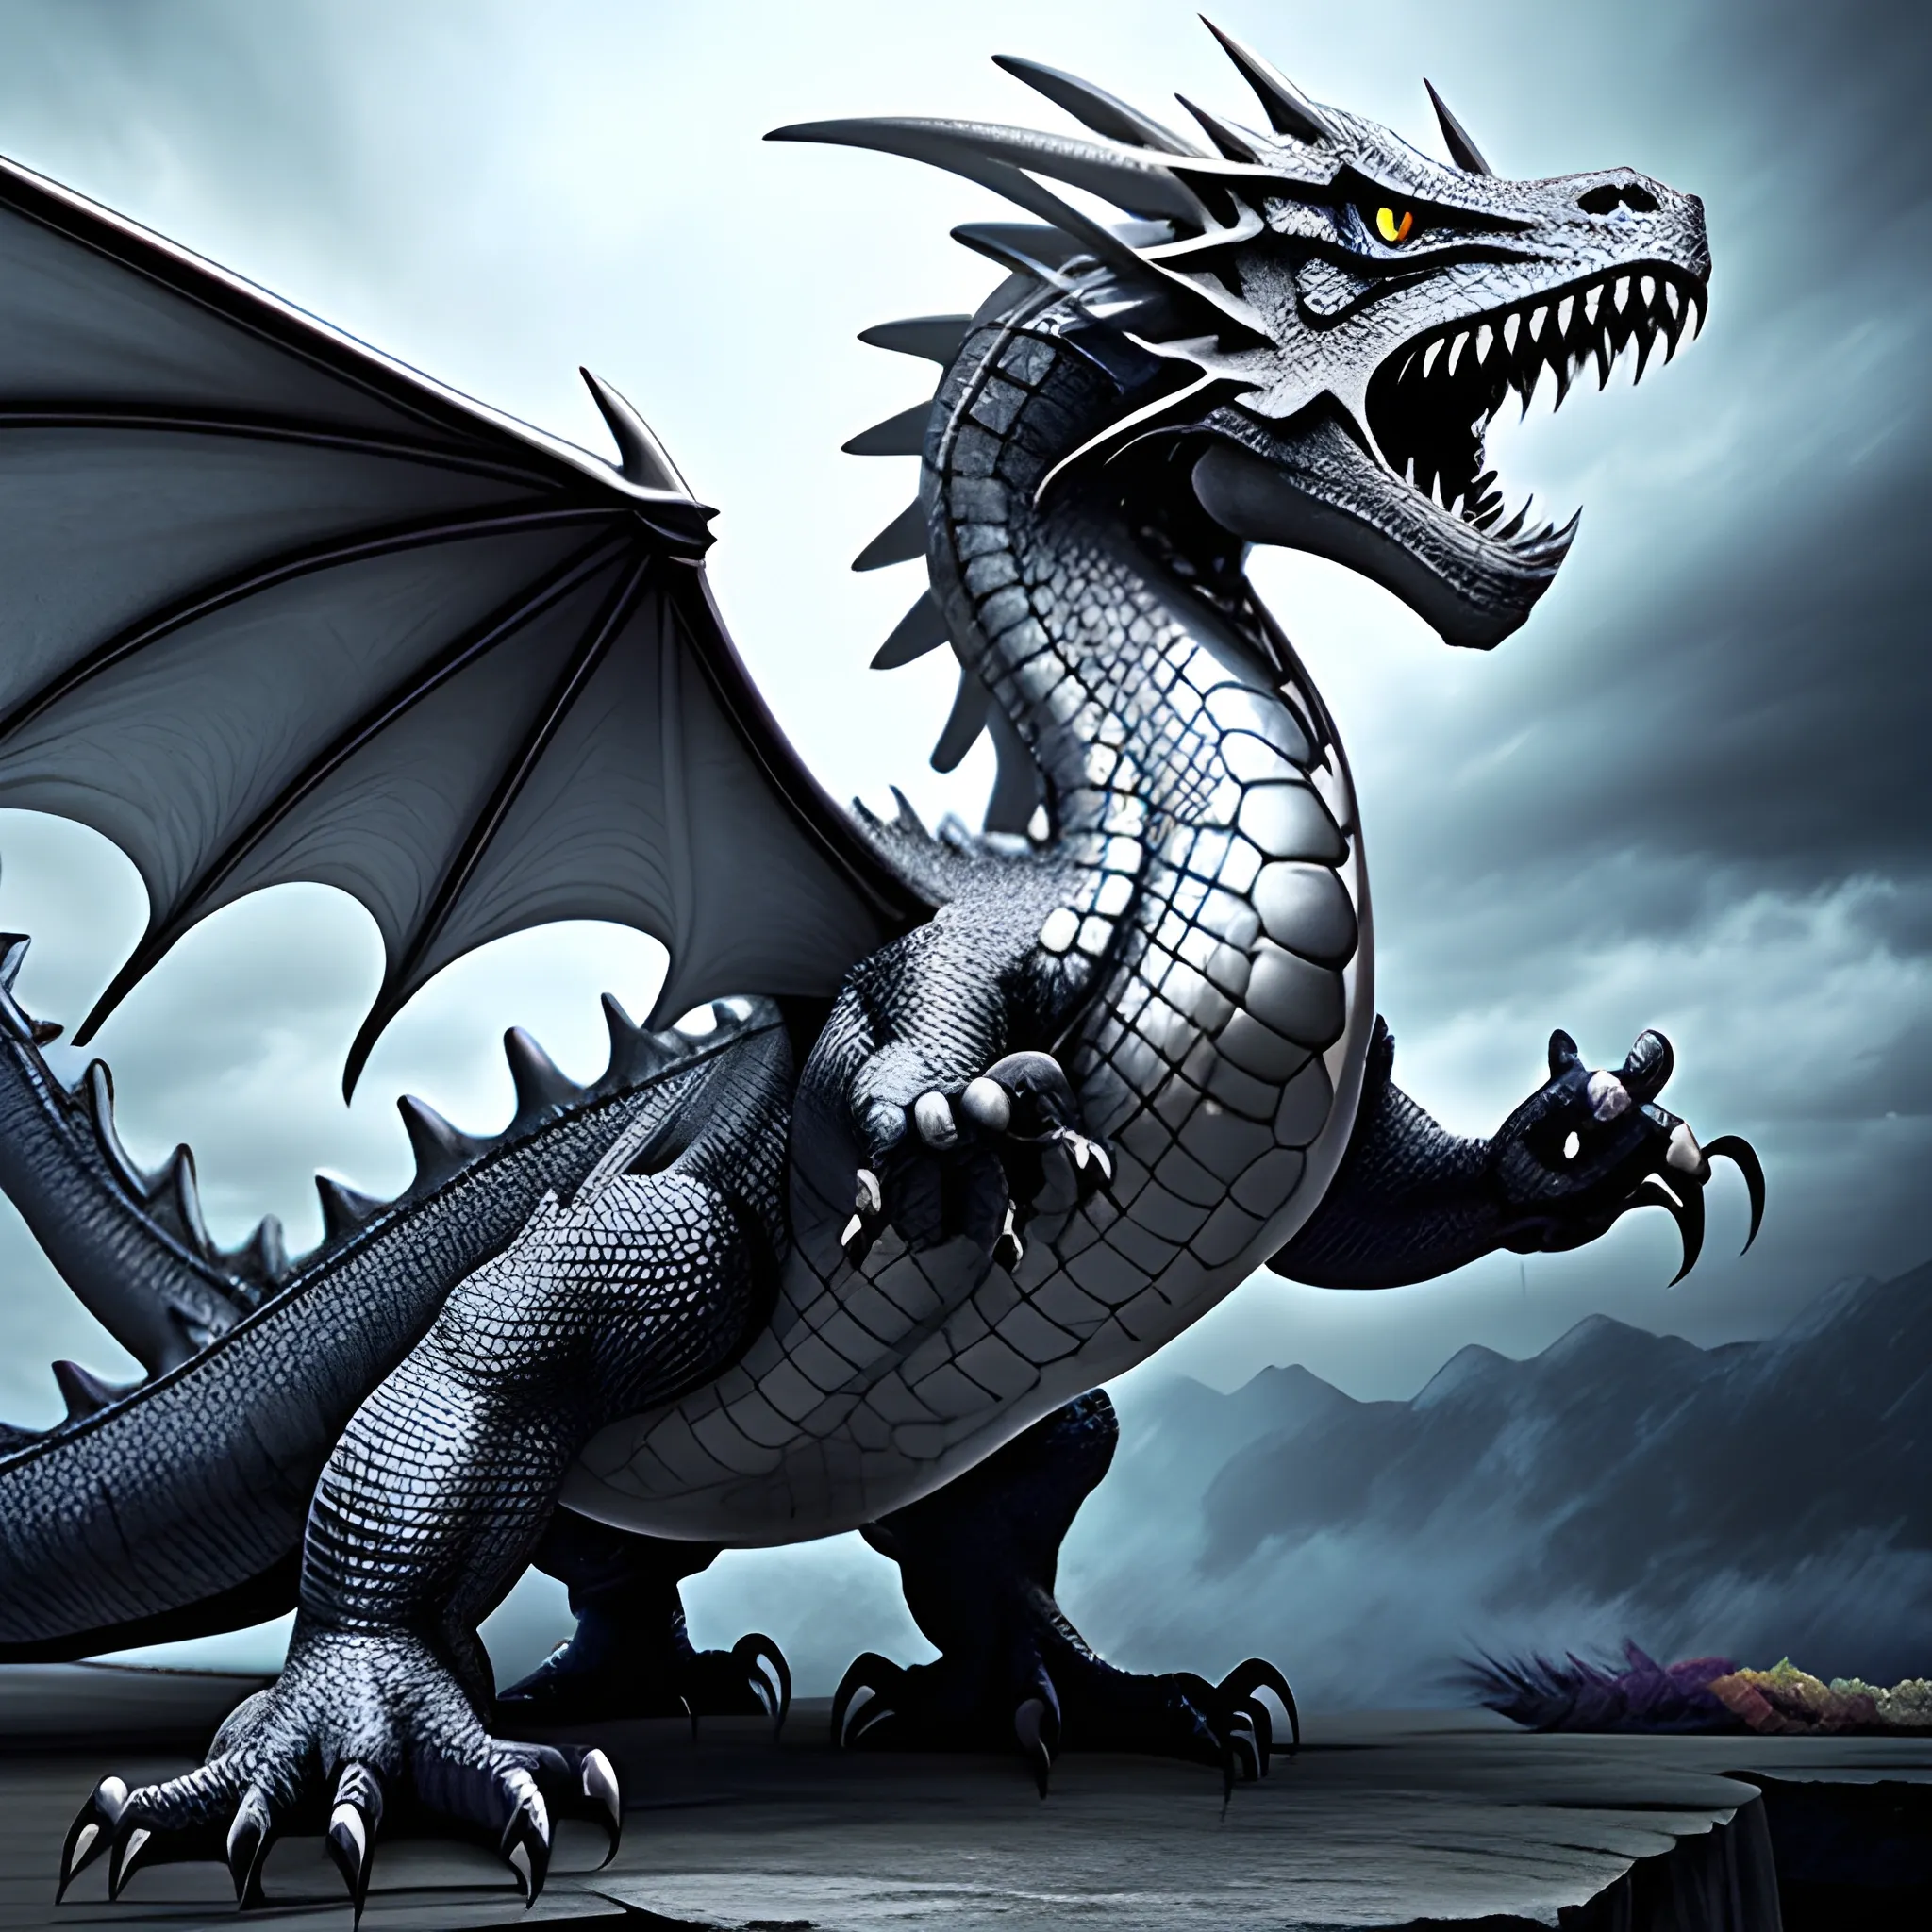 A fearsome Platinum dragon